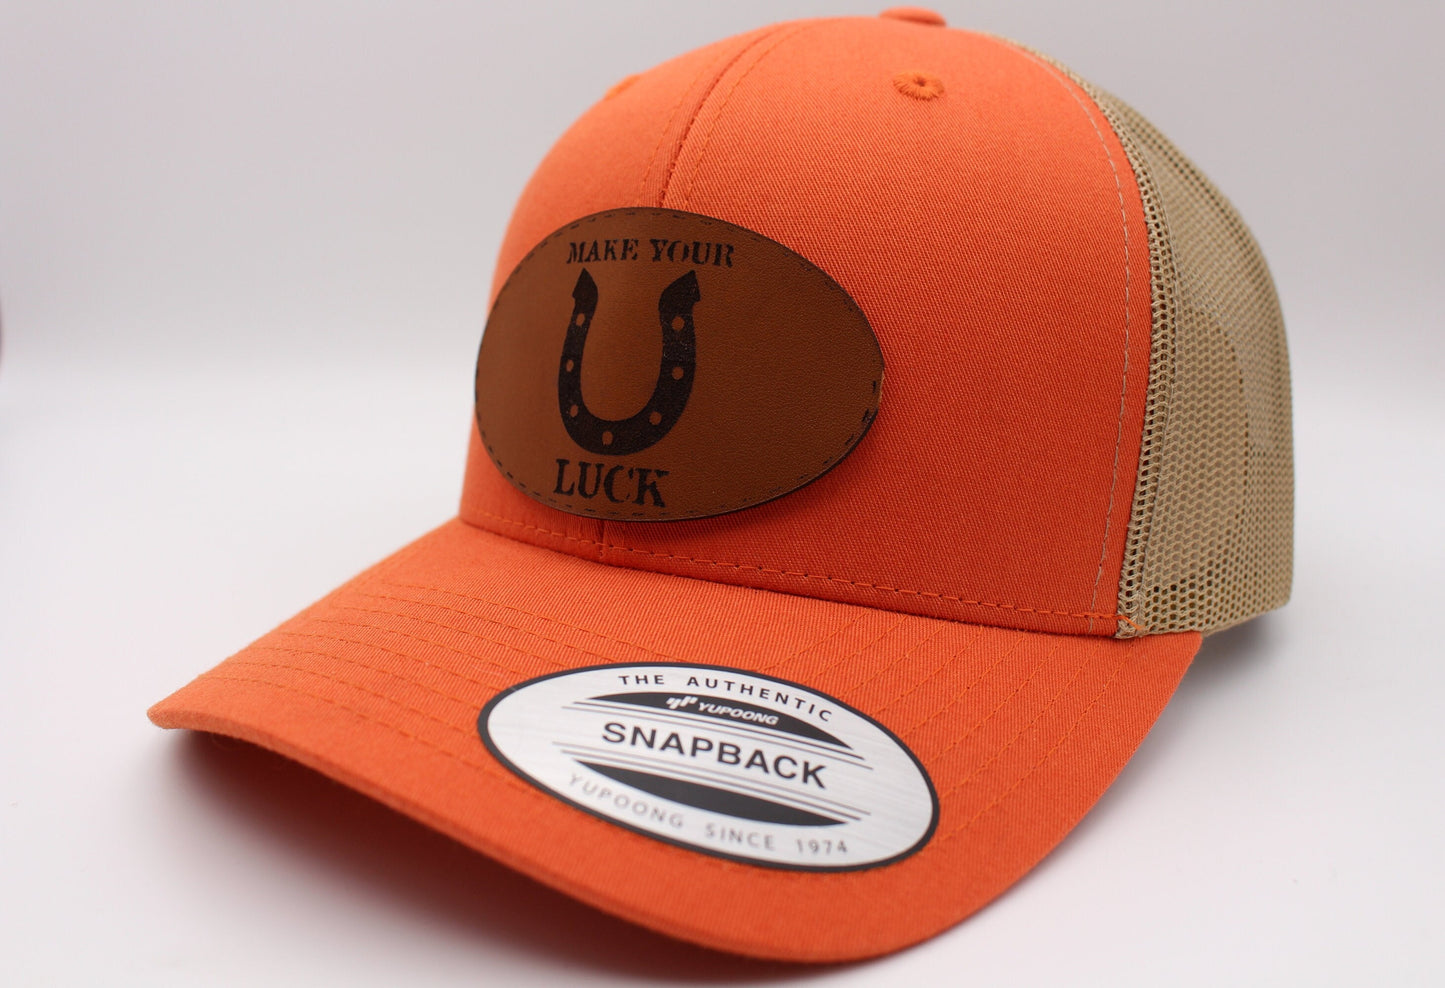 Make your Luck Trucker Snapback Hat